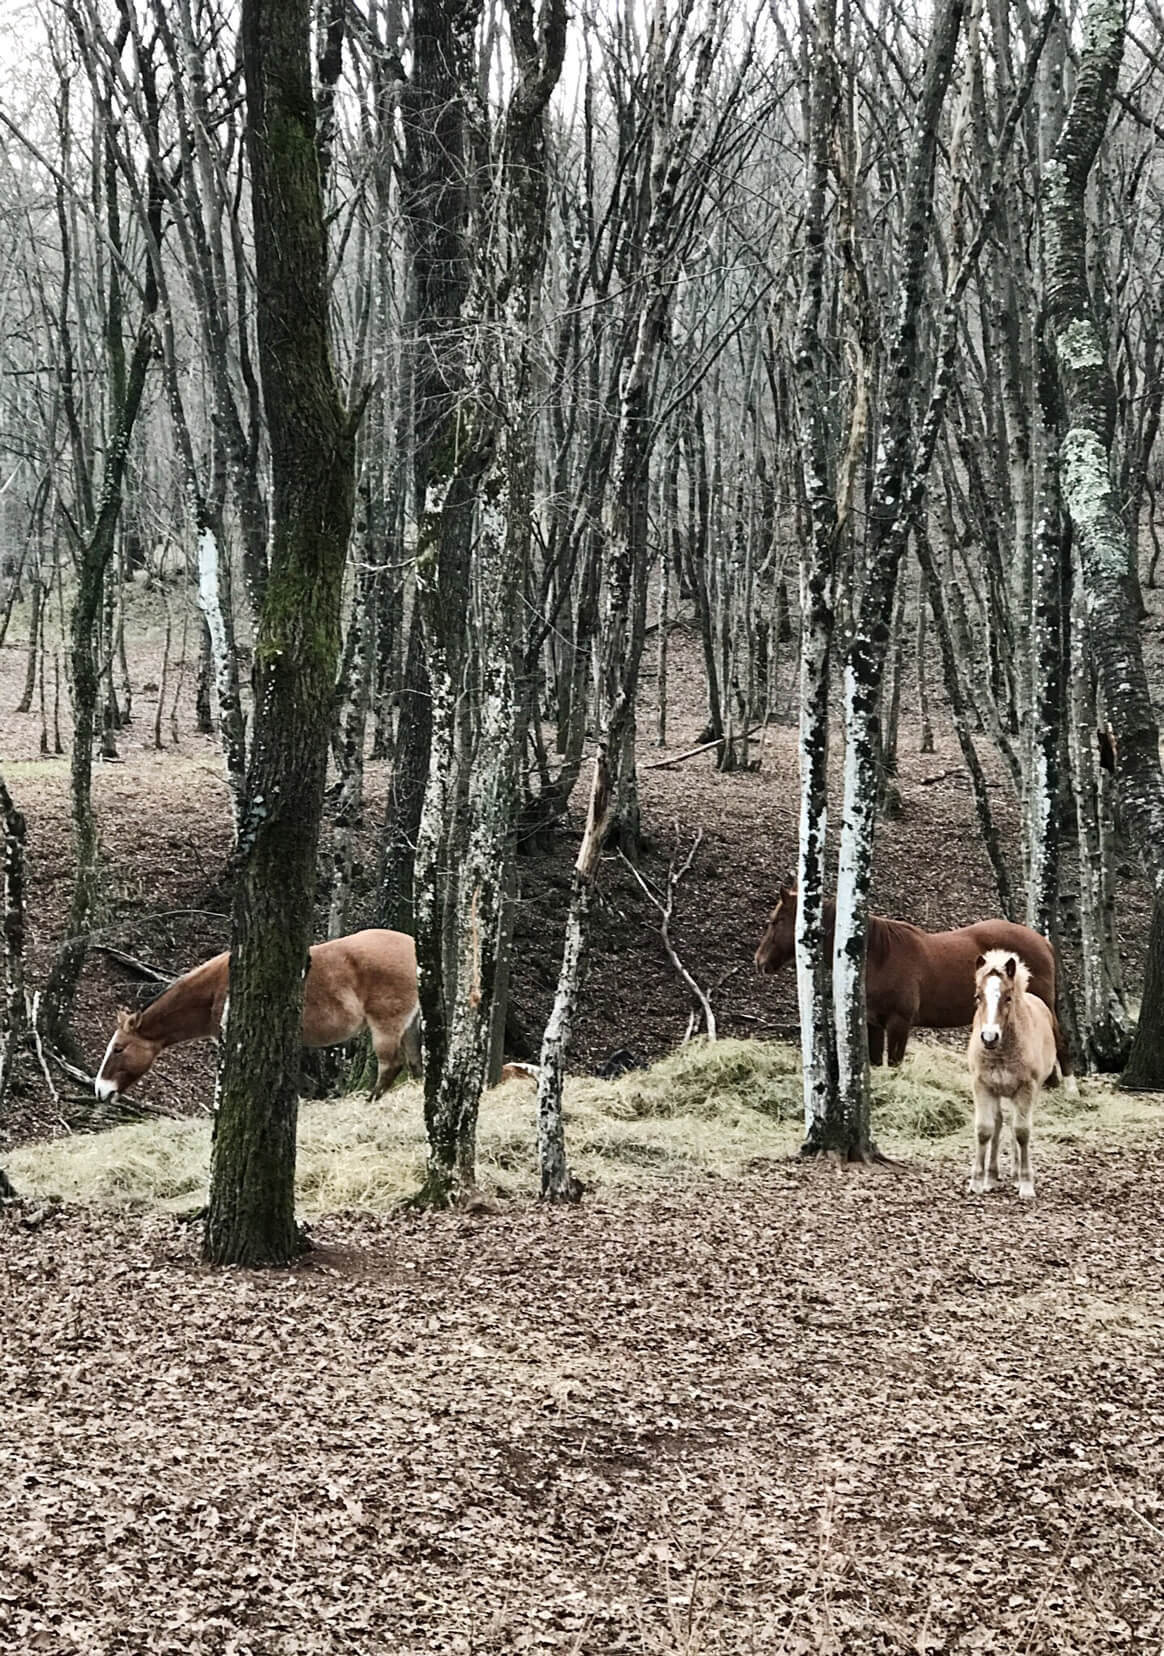 Three wild horses in the woods